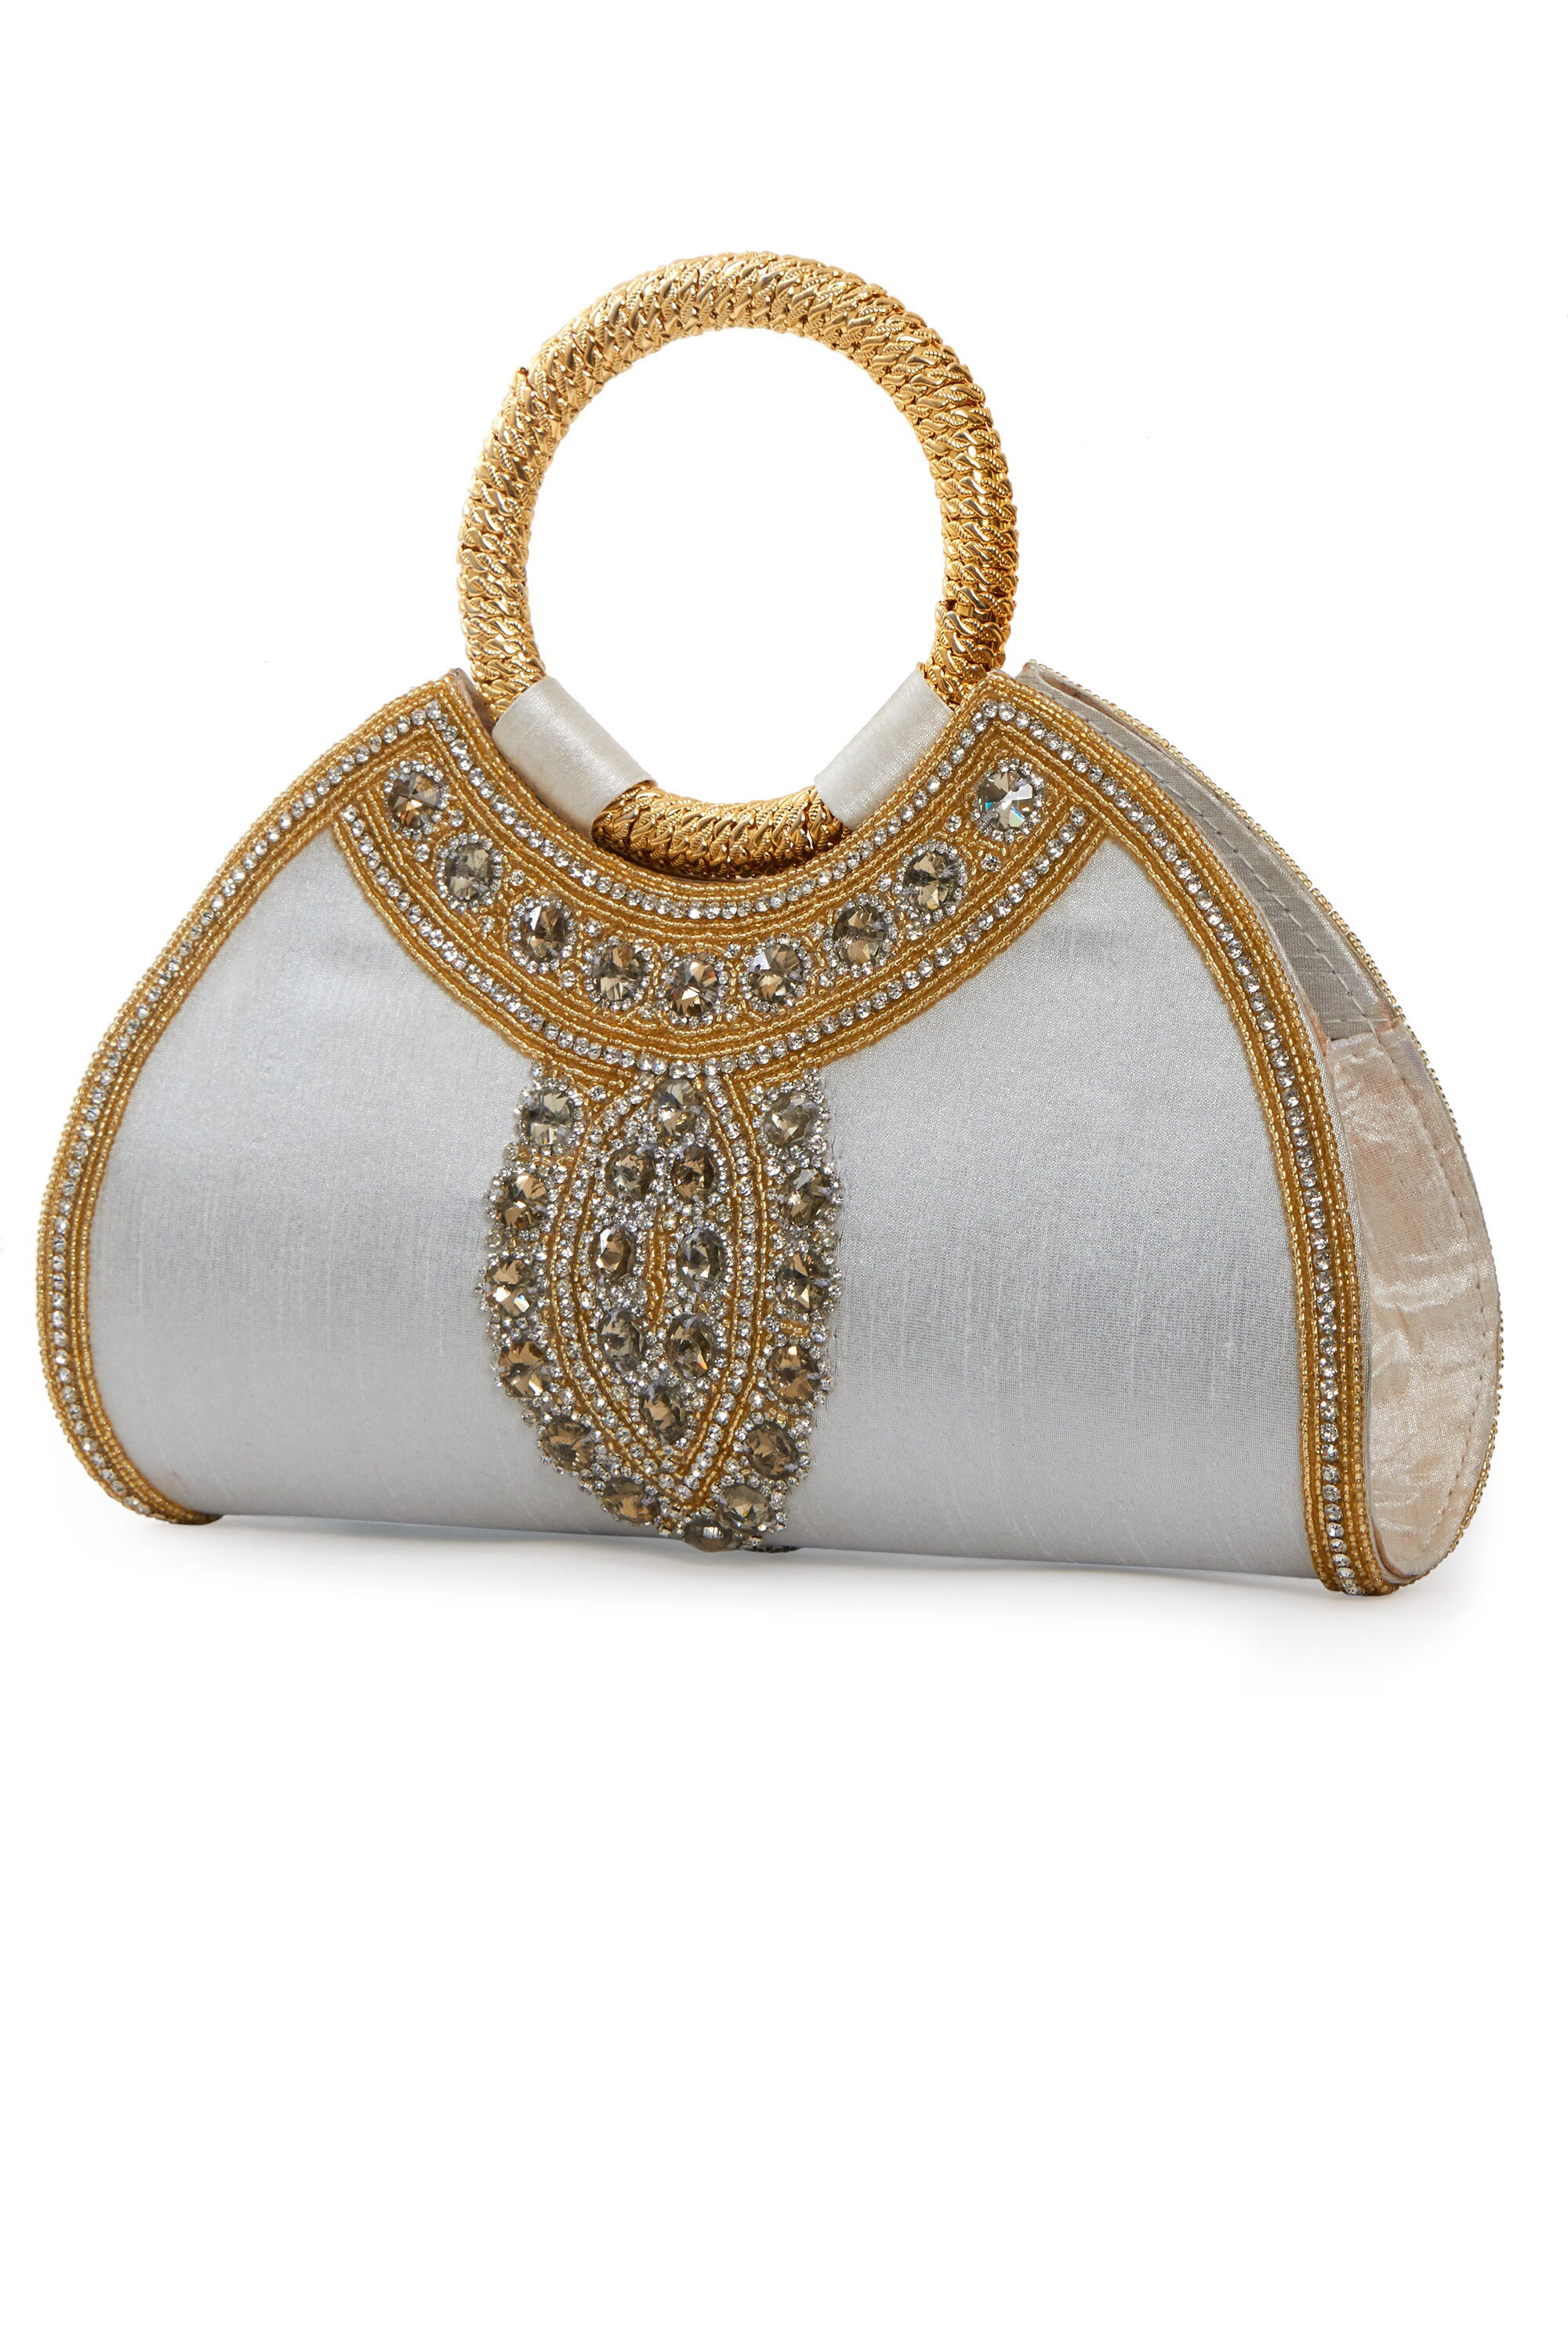 Rucavono Women's Evening Handbags,gold clutch purses for women evening Gold  purse For Wedding Party Bridal Prom Formal Gold Evening Shoulder Handbag:  Handbags: Amazon.com